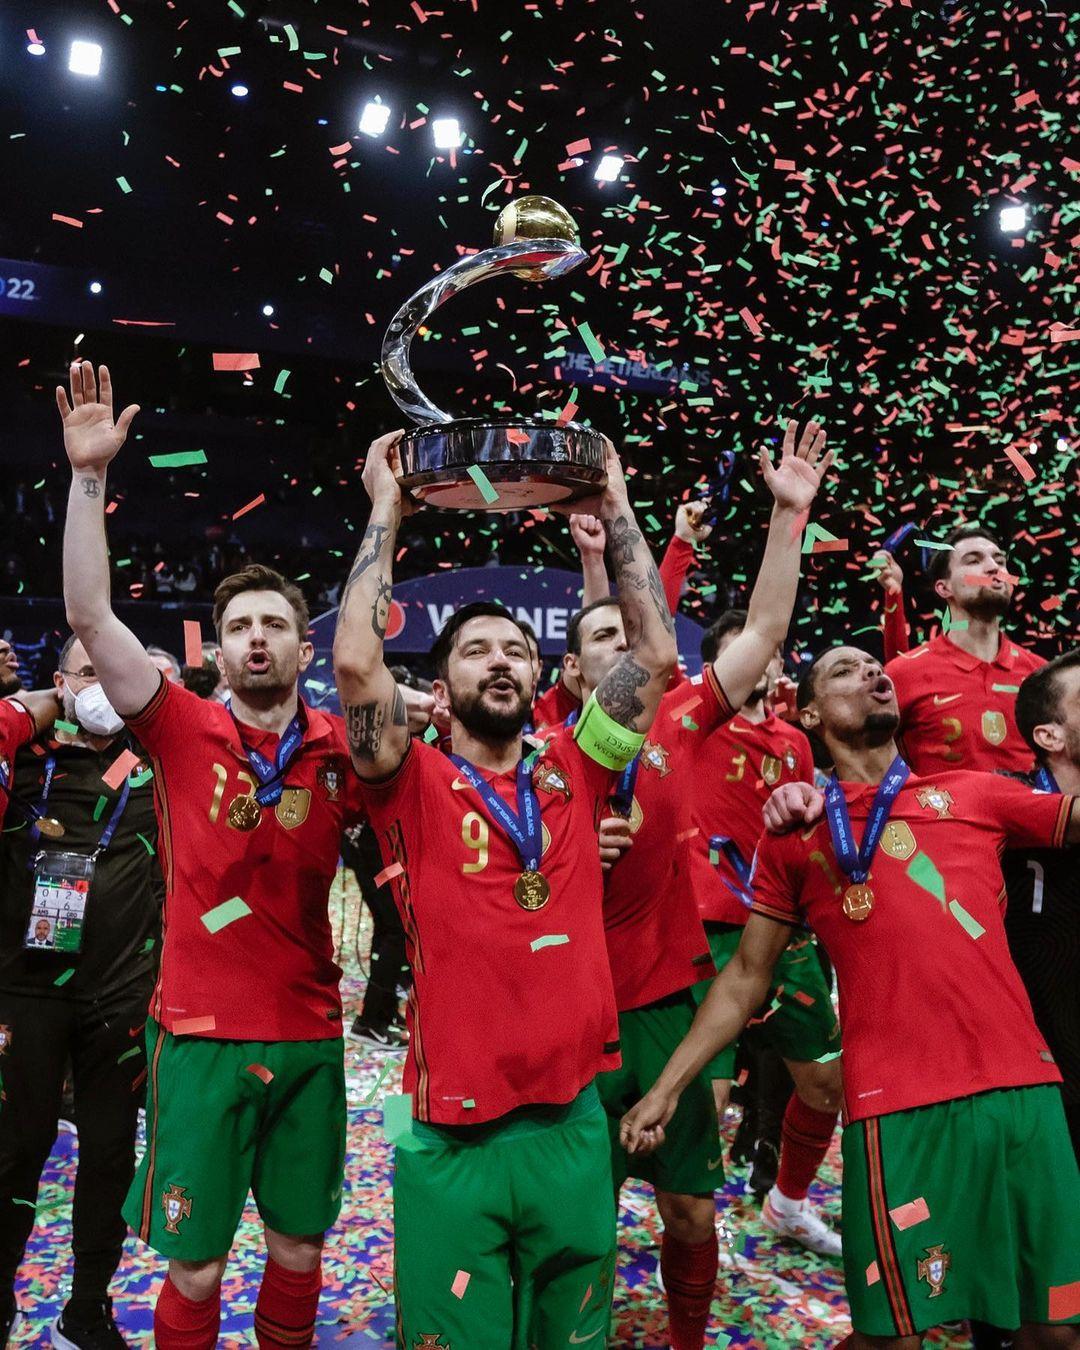 #OTD Há 2 anos, Portugal tornava-se bicampeão Europeu de Futsal! 🥹🇵🇹 #VesteABandeira

Two years ago, we became two-time European Champions! 🥹🇵🇹 #WearTheFlag